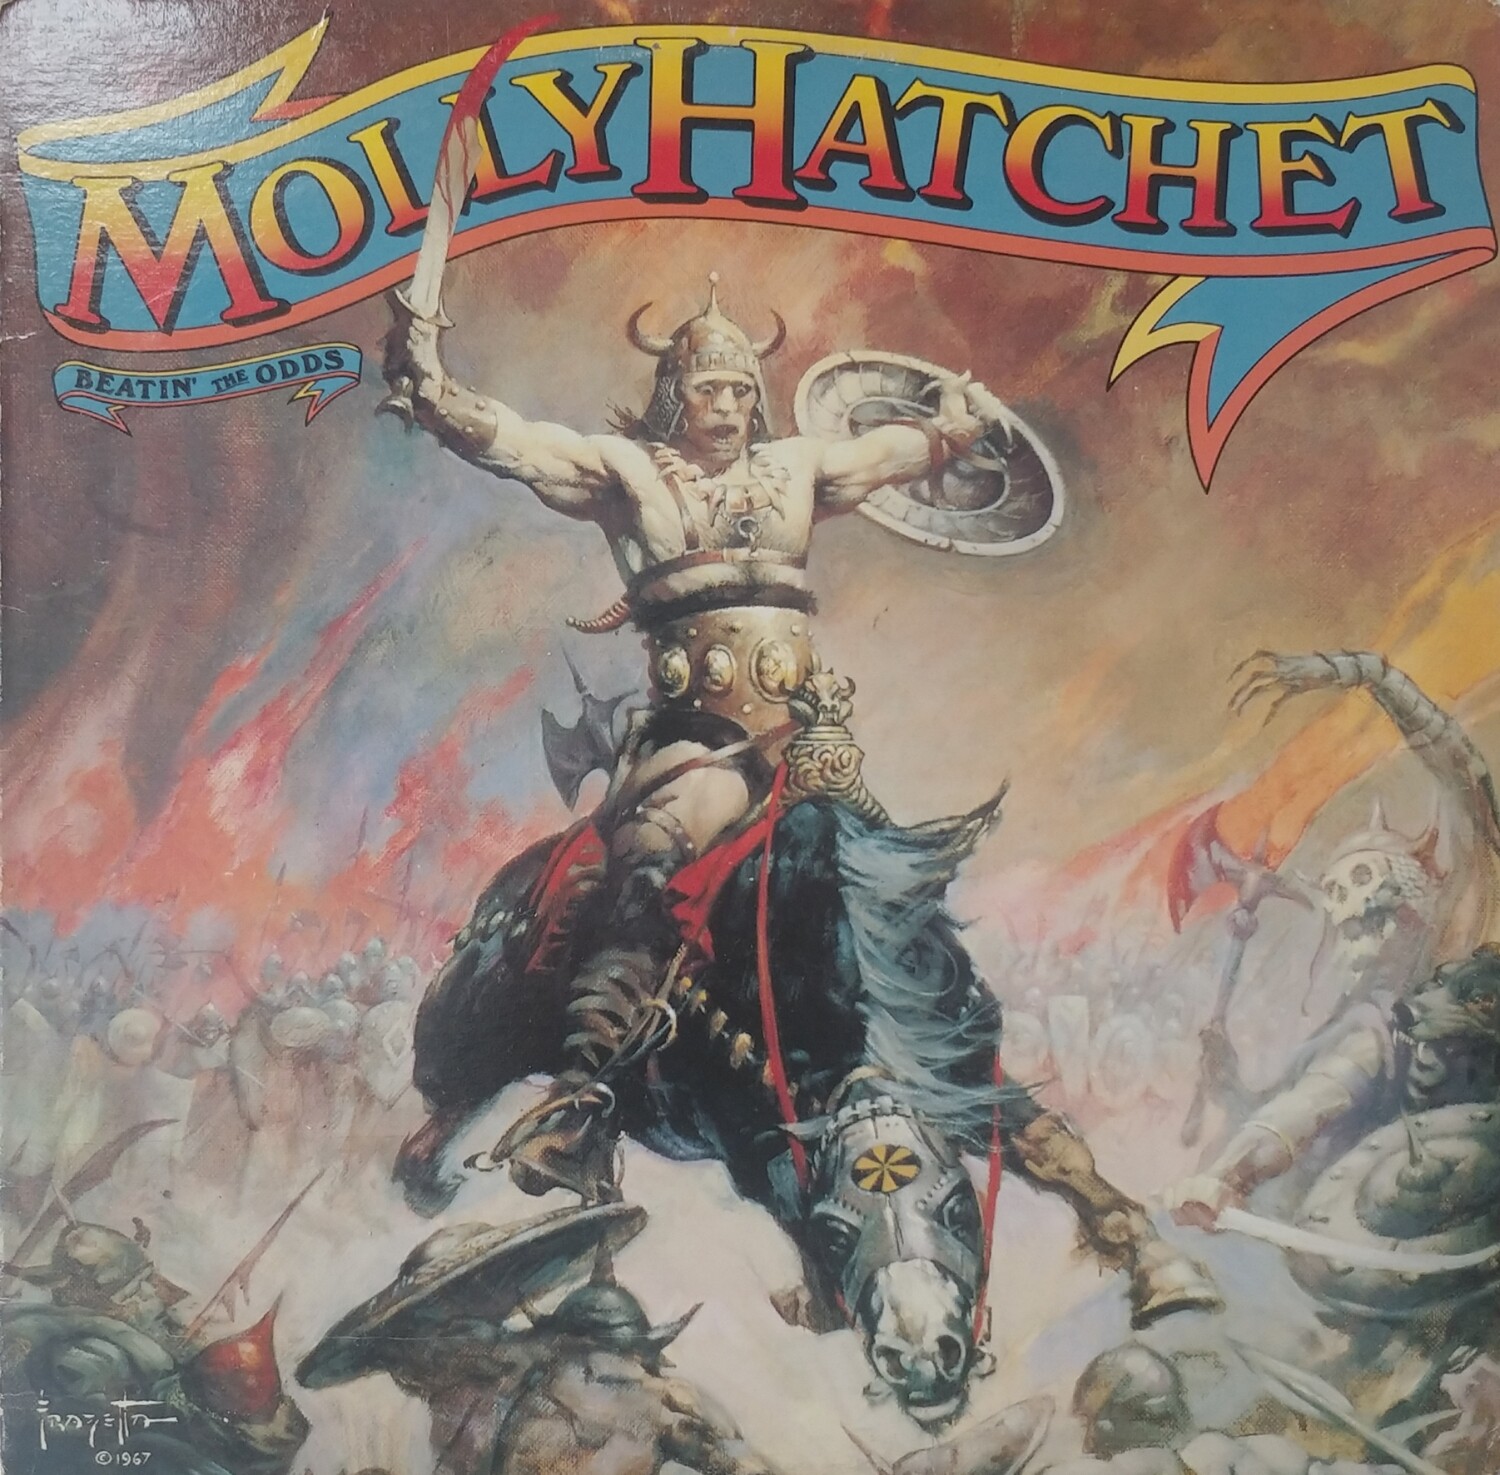 Molly Hatchet - Beatin' the odds